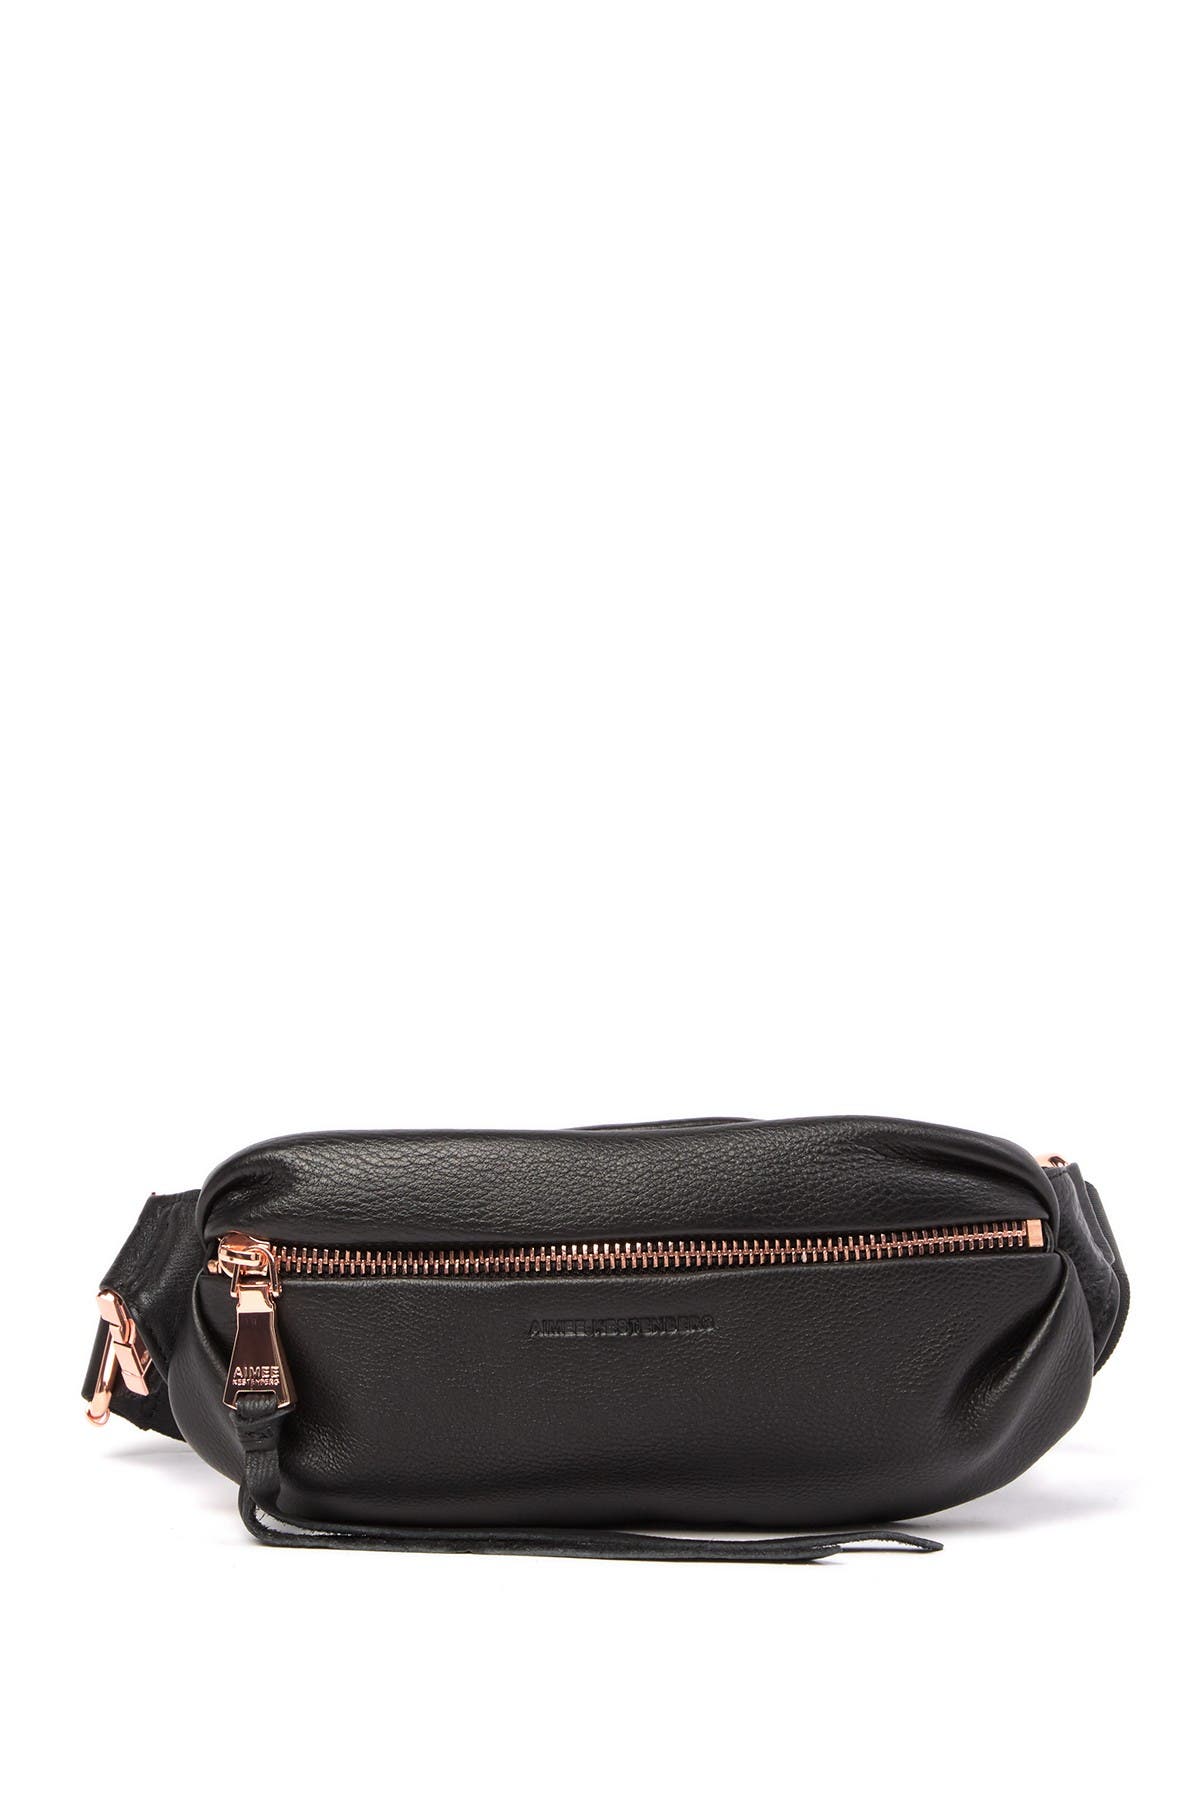 Aimee Kestenberg Milan Leather Belt Bag In Black W/ Rose Gold